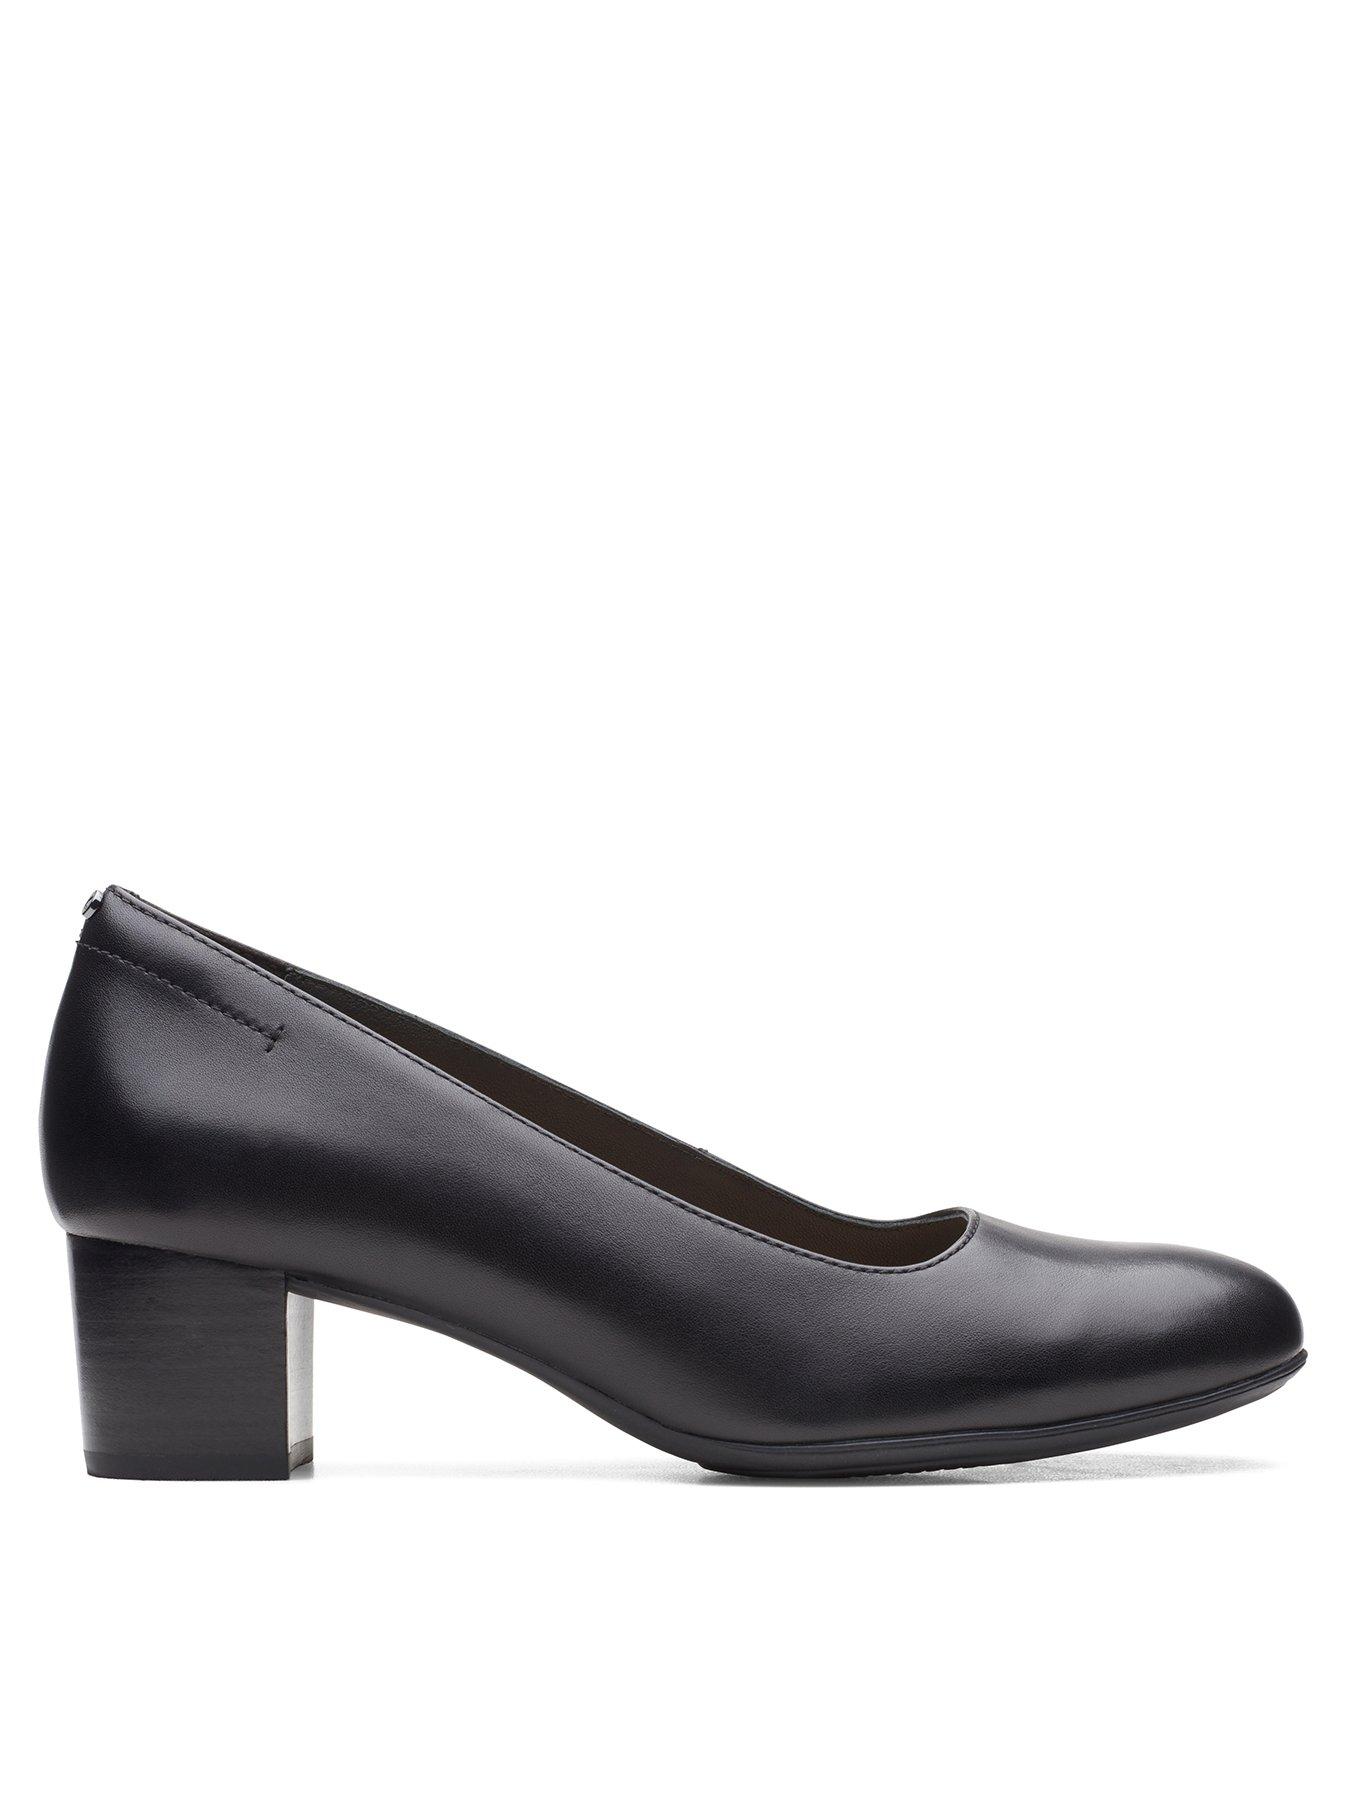 All Offers | Clarks | Heels | Shoes boots | Women | www.very.co.uk